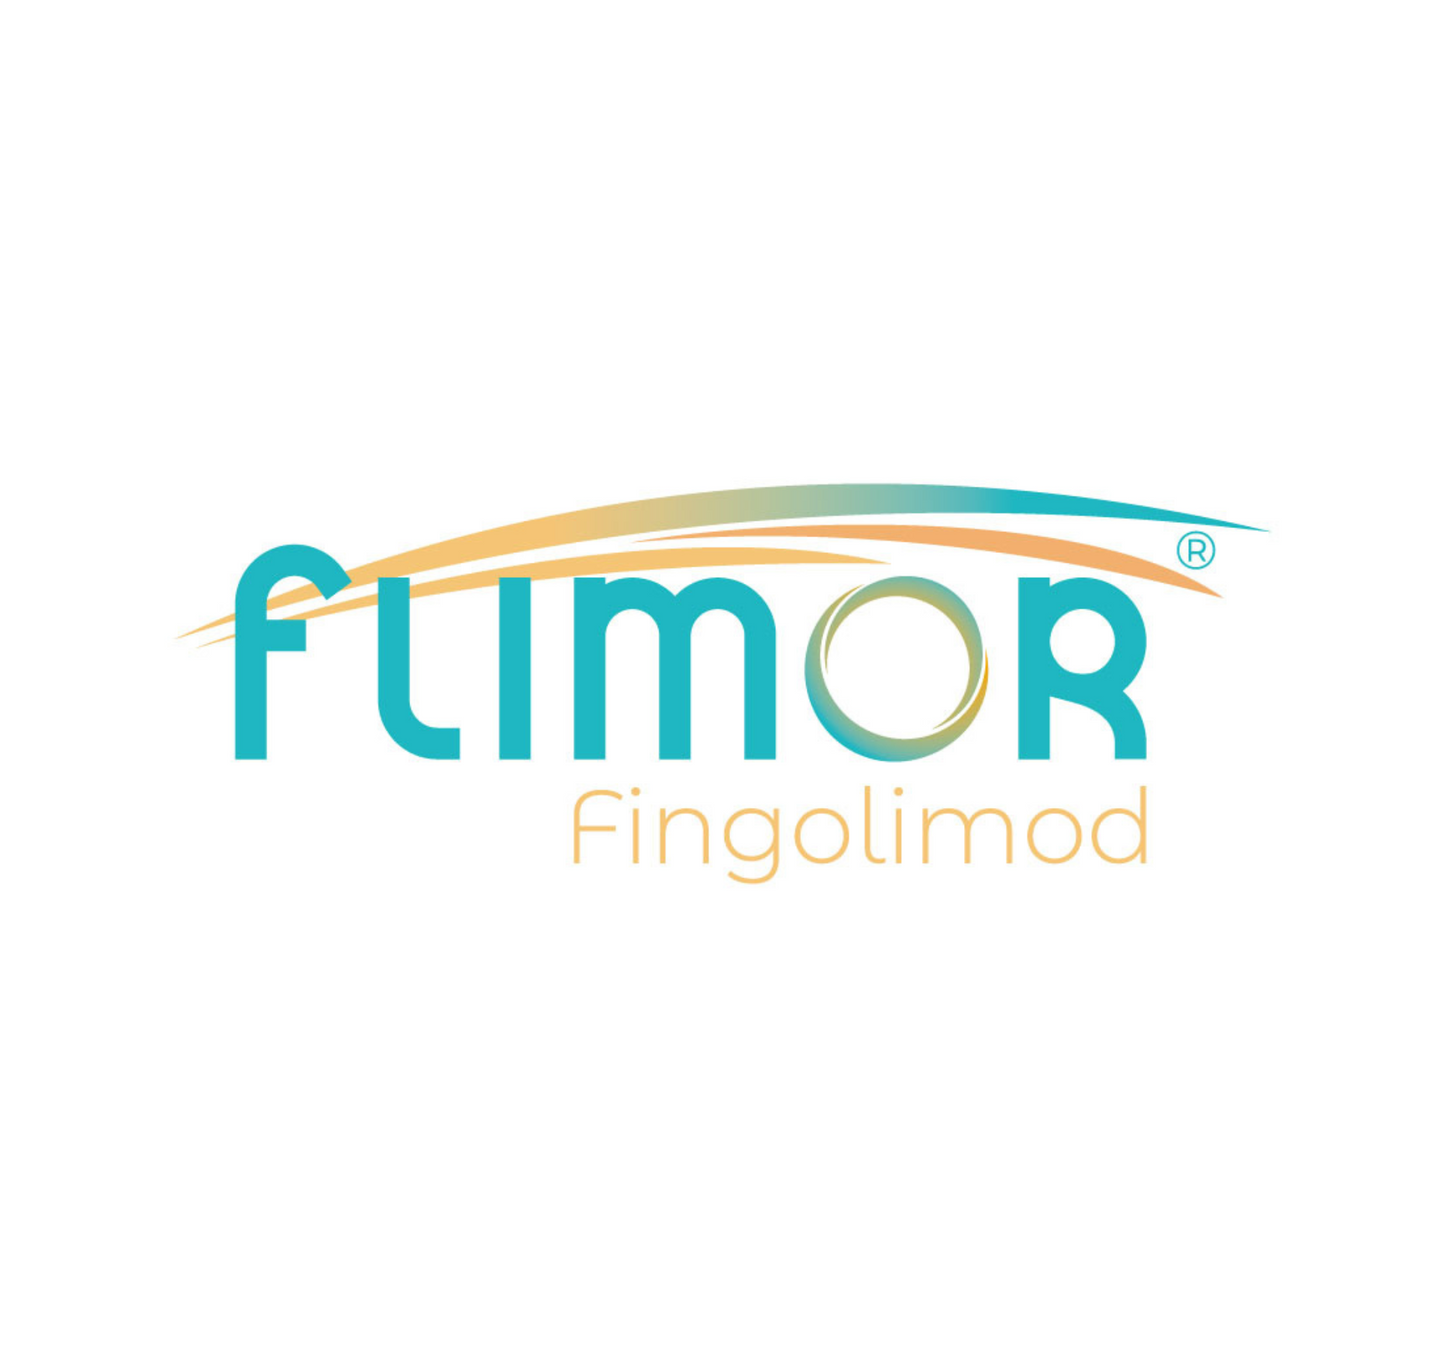 FLIMOR - FINGOLIMOD